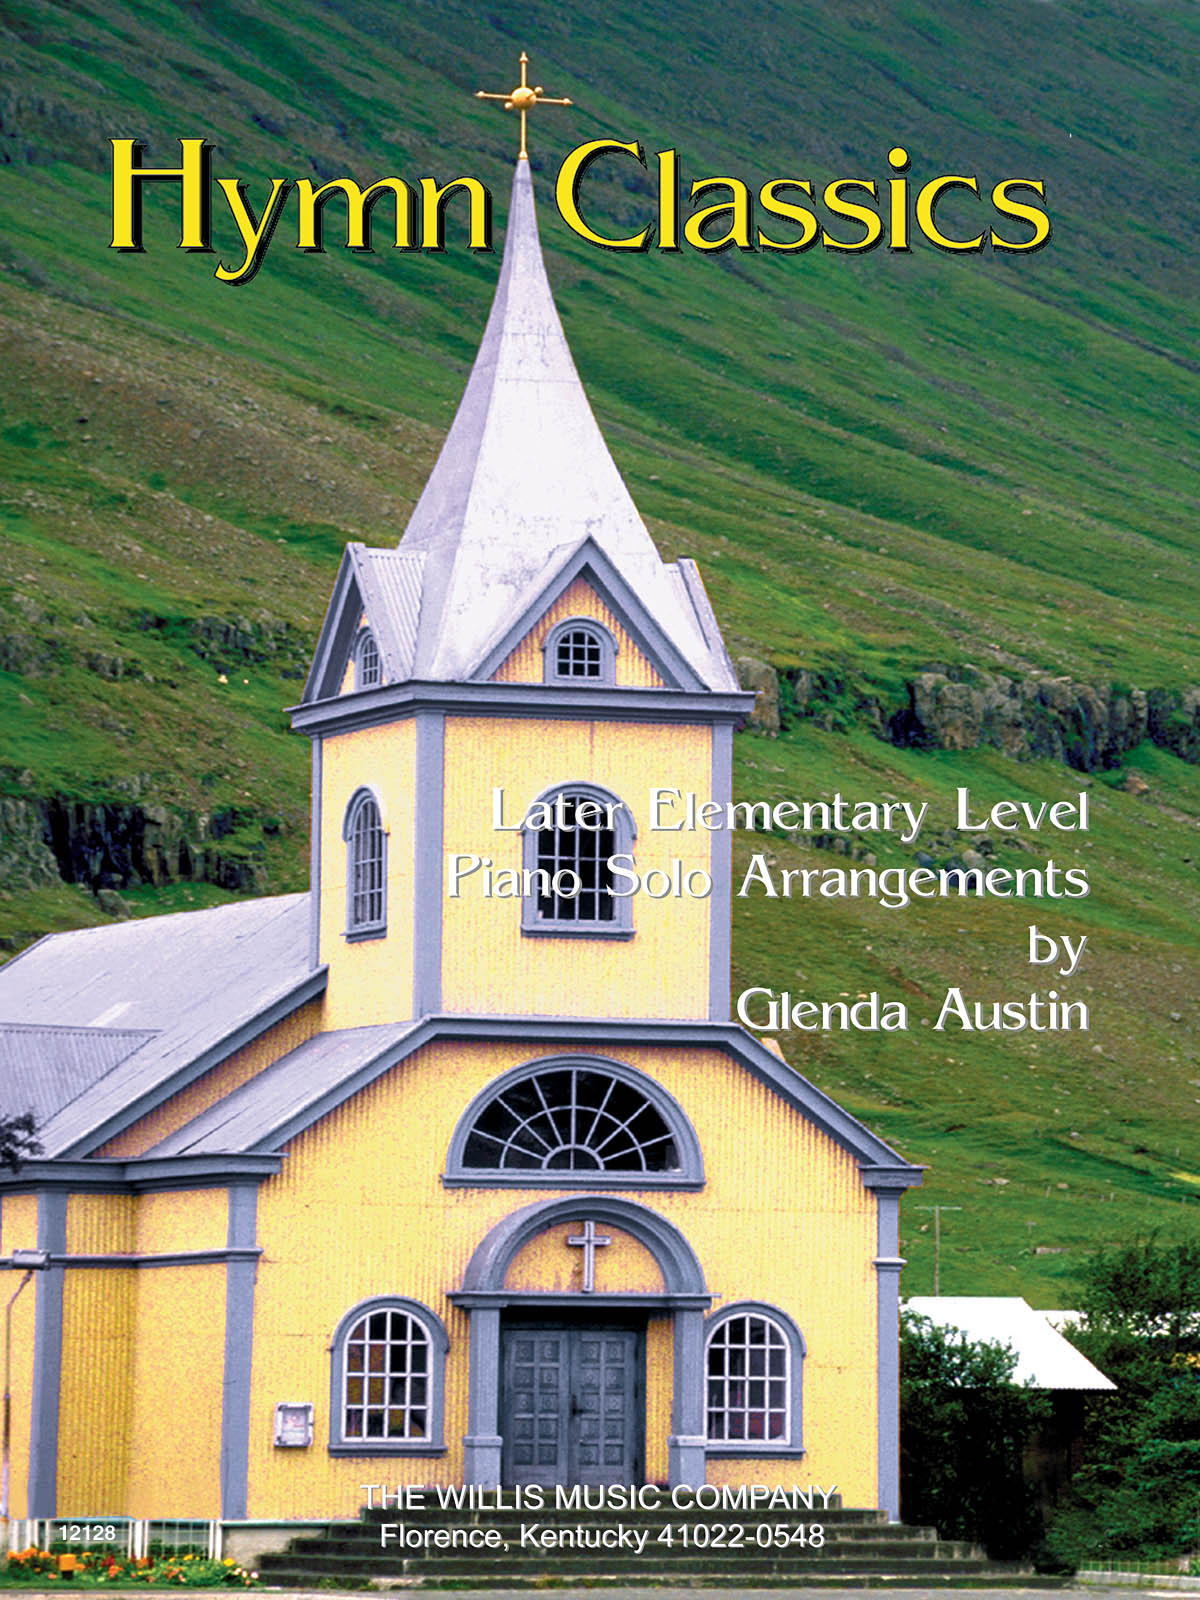 Hymn Classics: Piano: Instrumental Album